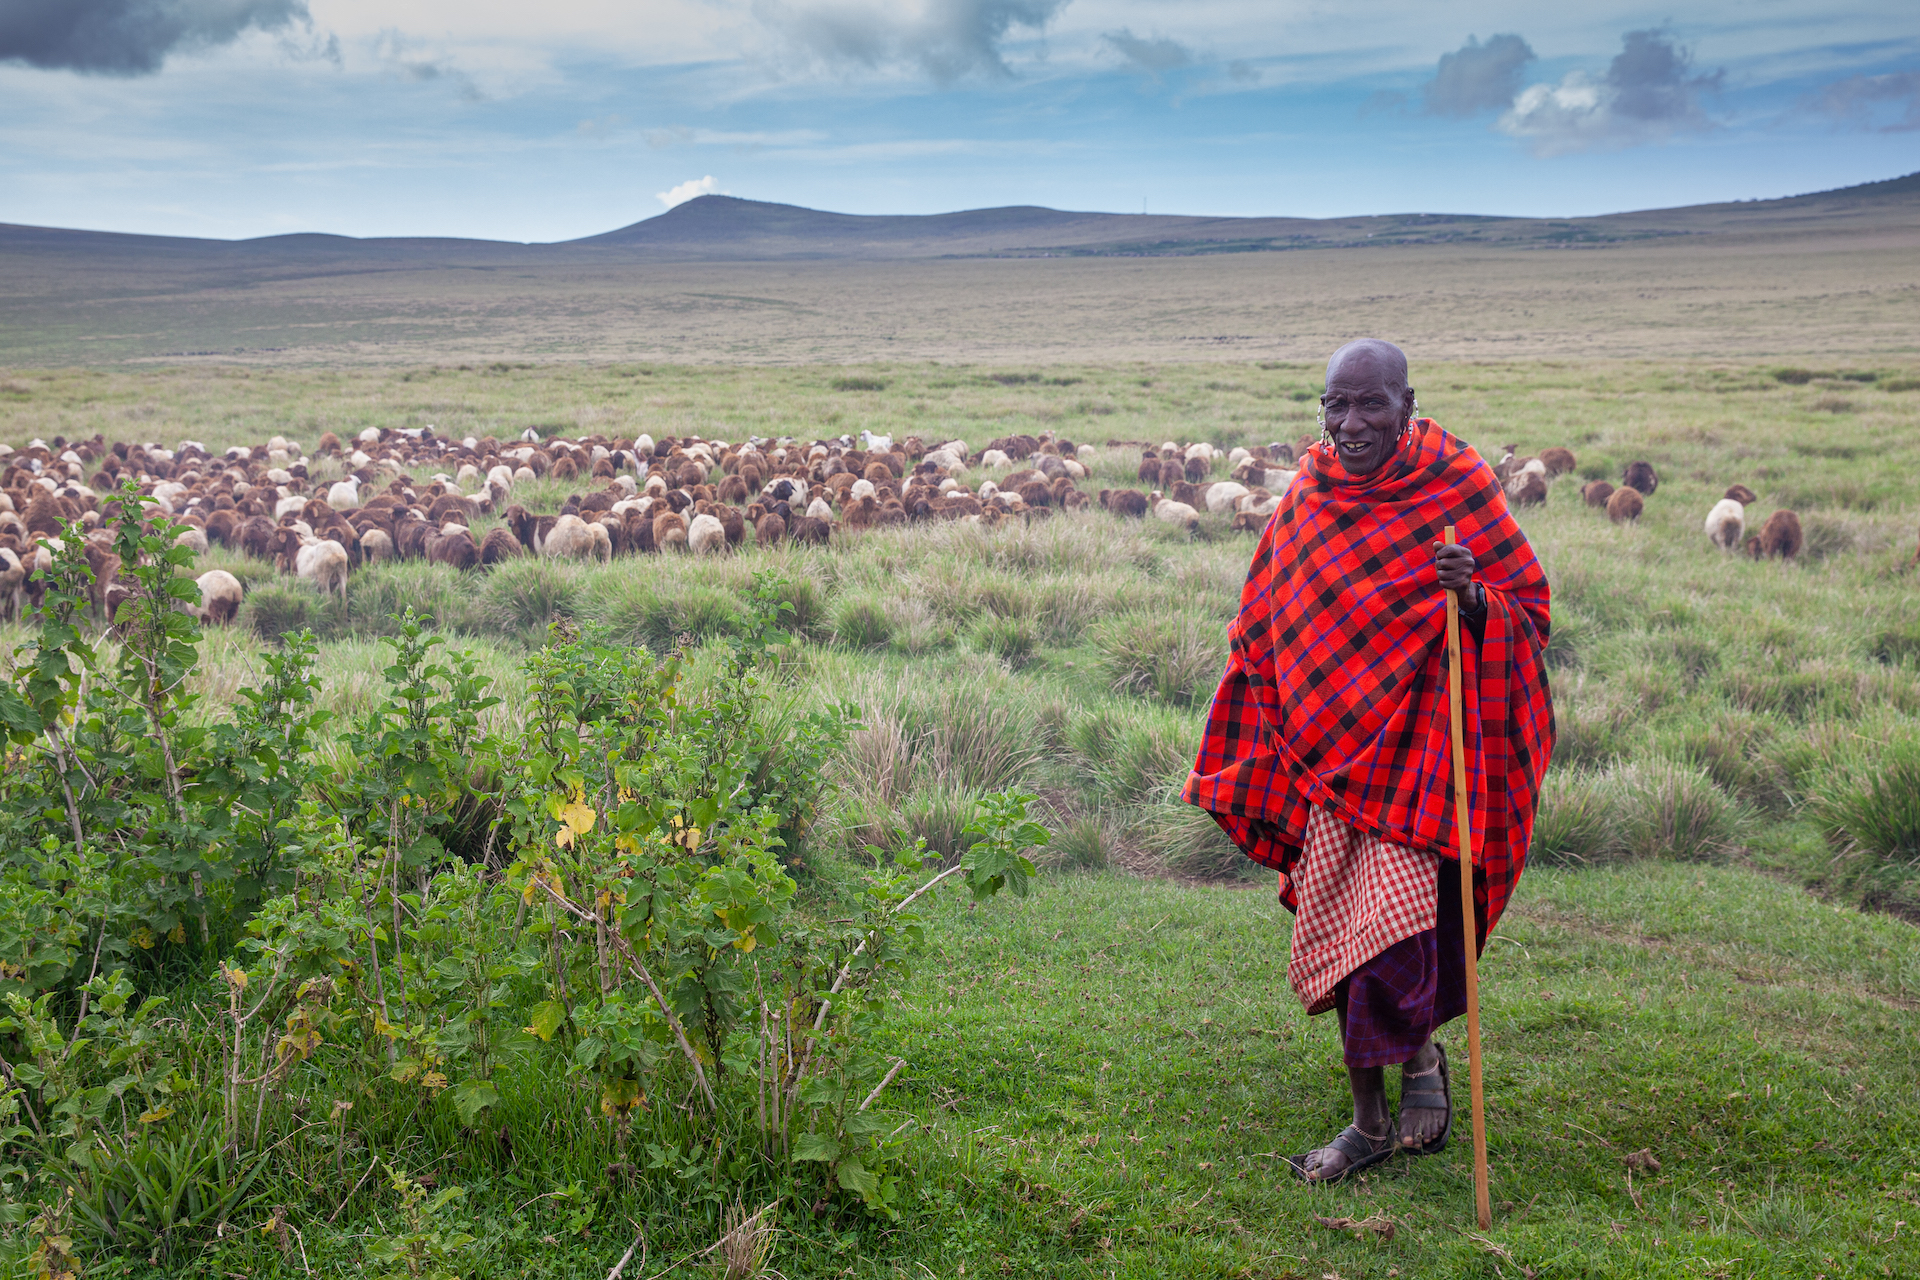 Masajský pastevec, Bulati - Planeta lidí